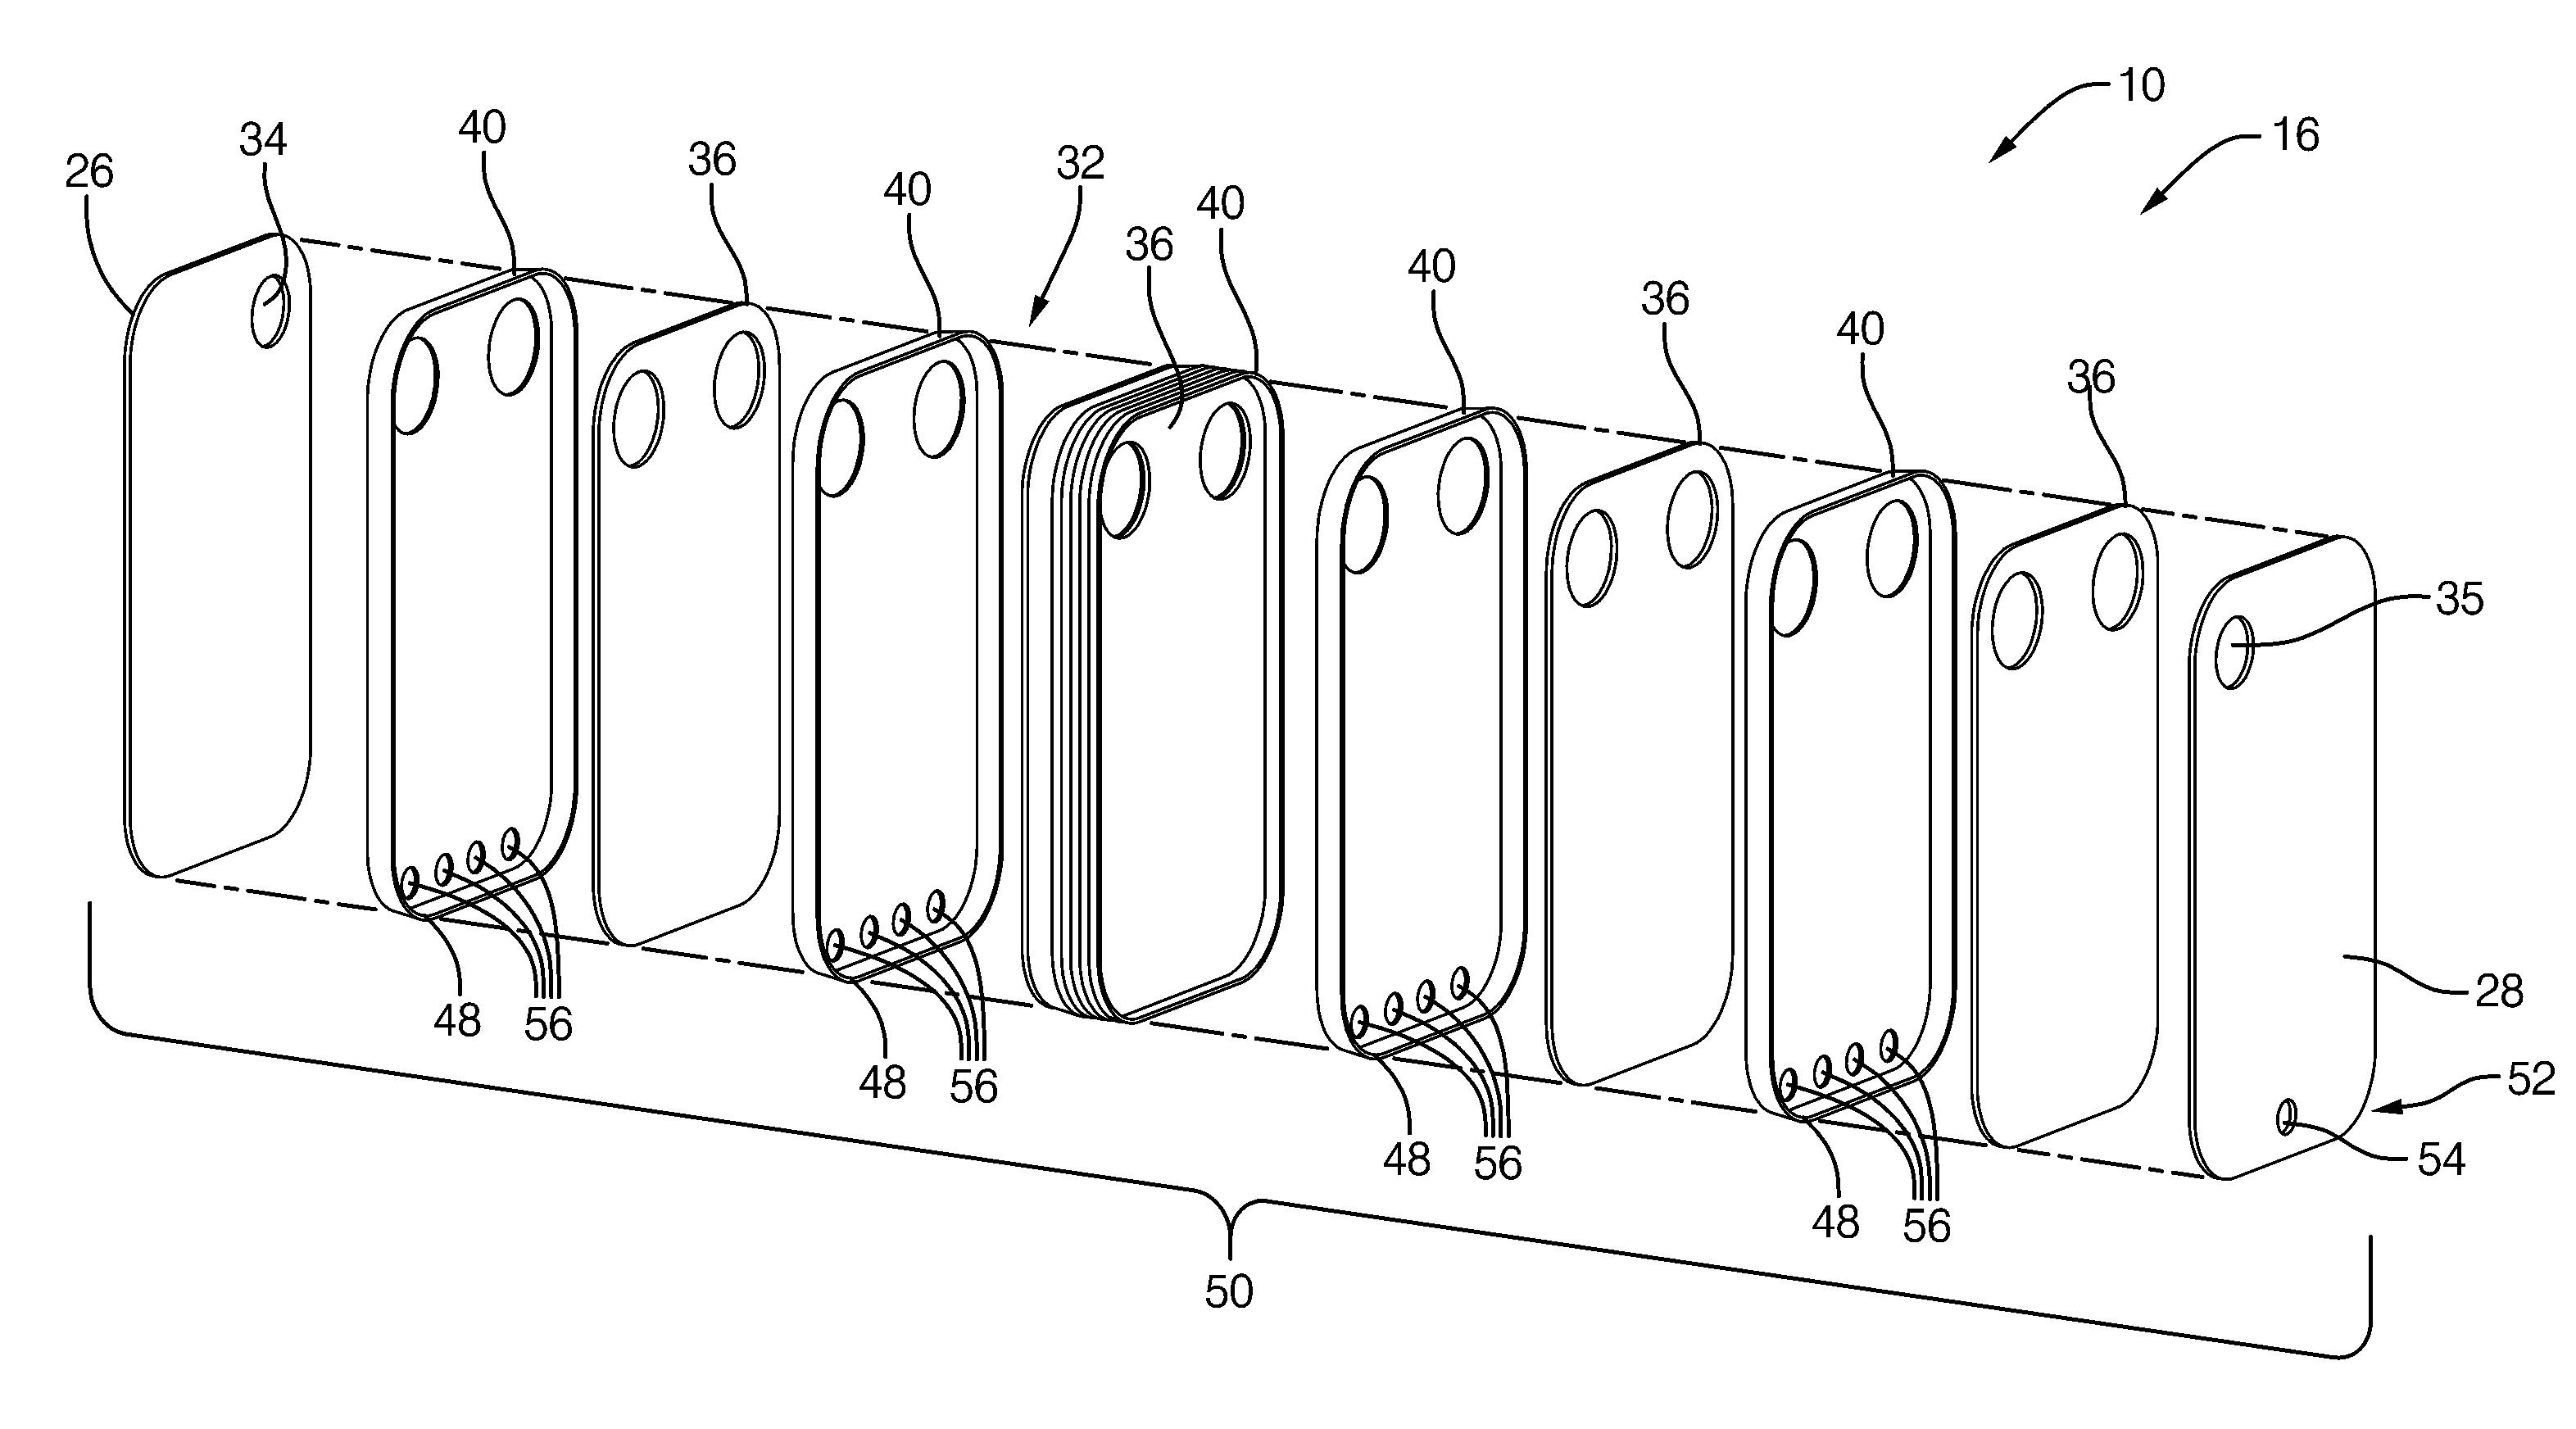 Parallel plate type refrigerant storage device